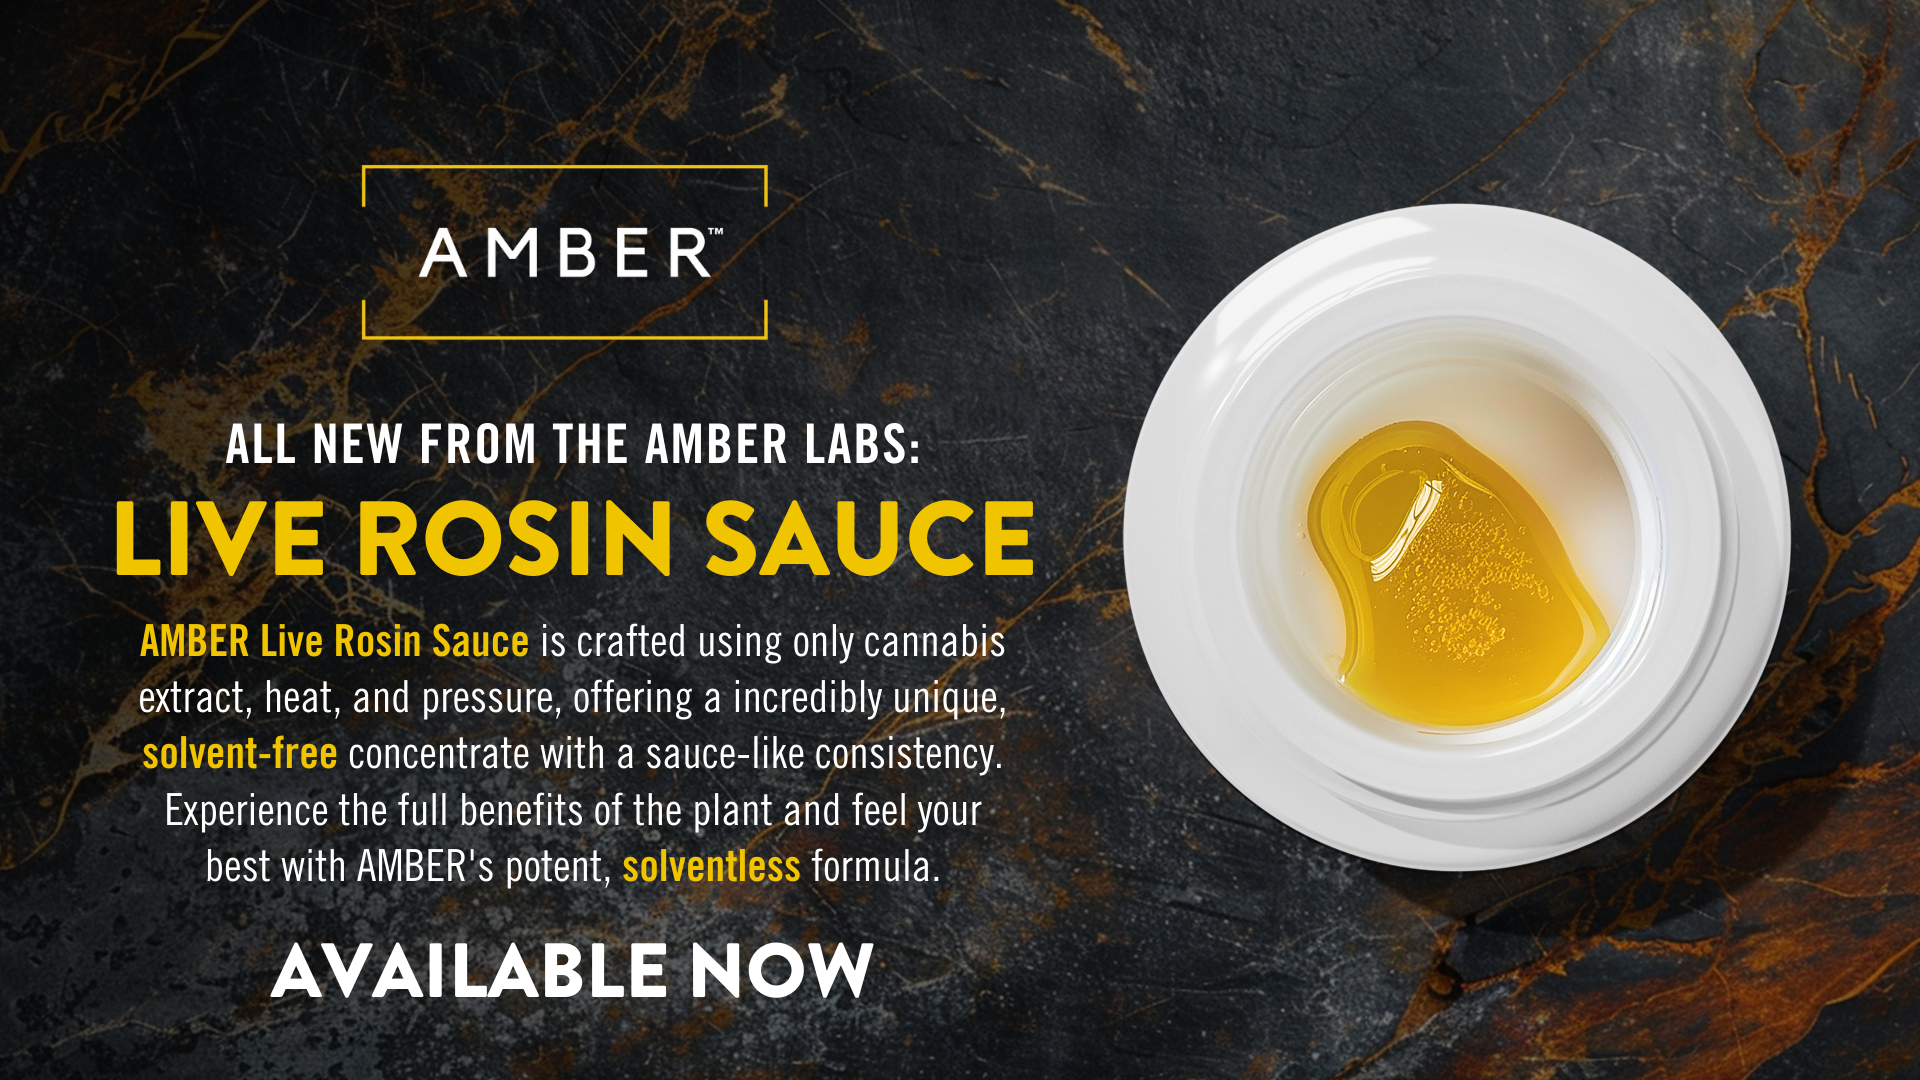 Copy of Amber Live Rosin Sauce TV